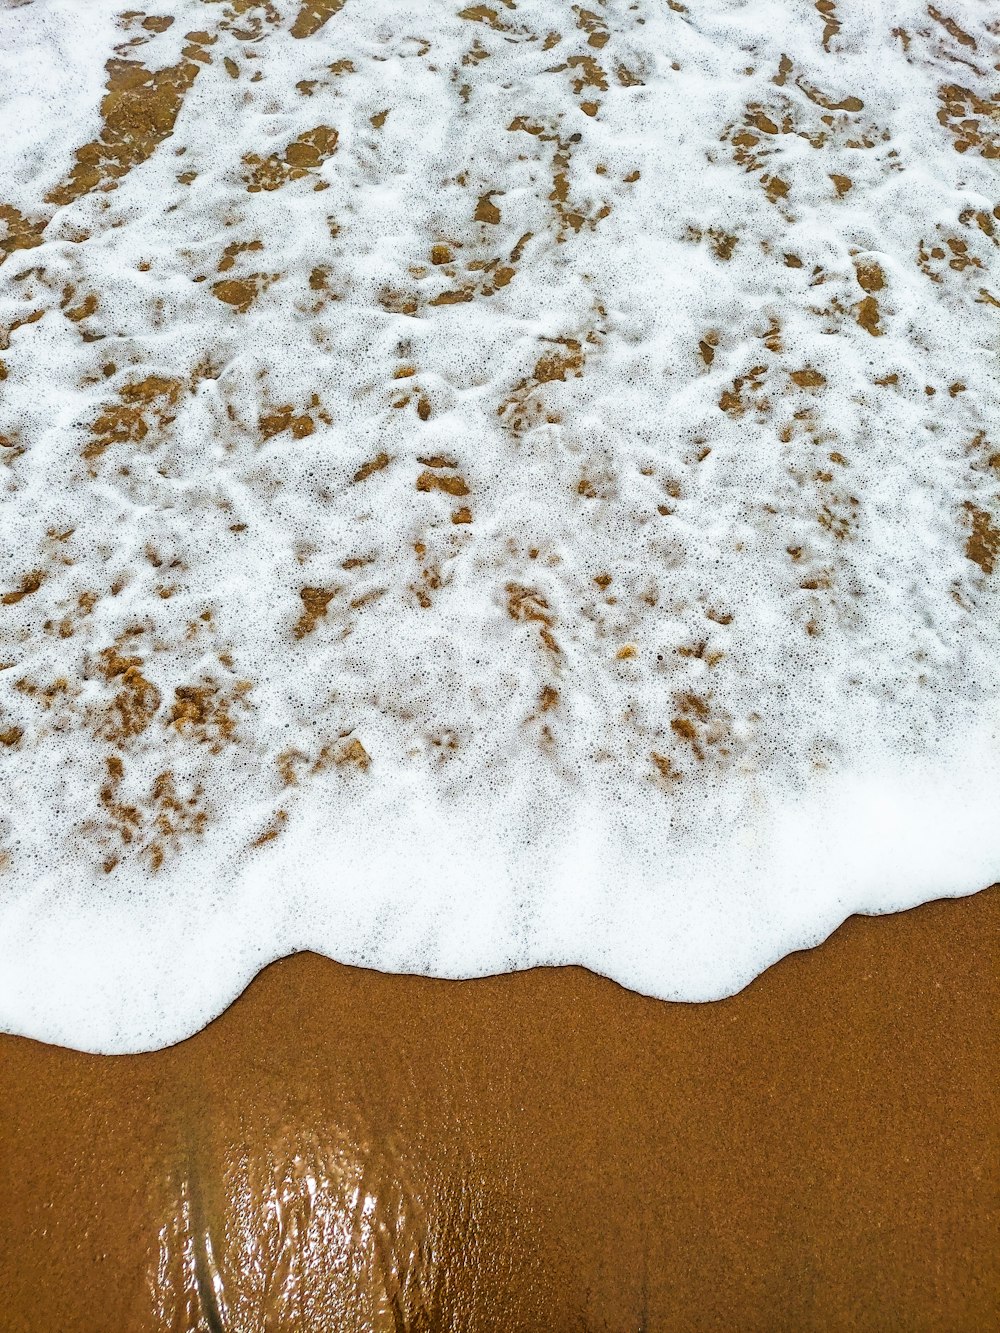 a close up of a wave on a sandy beach